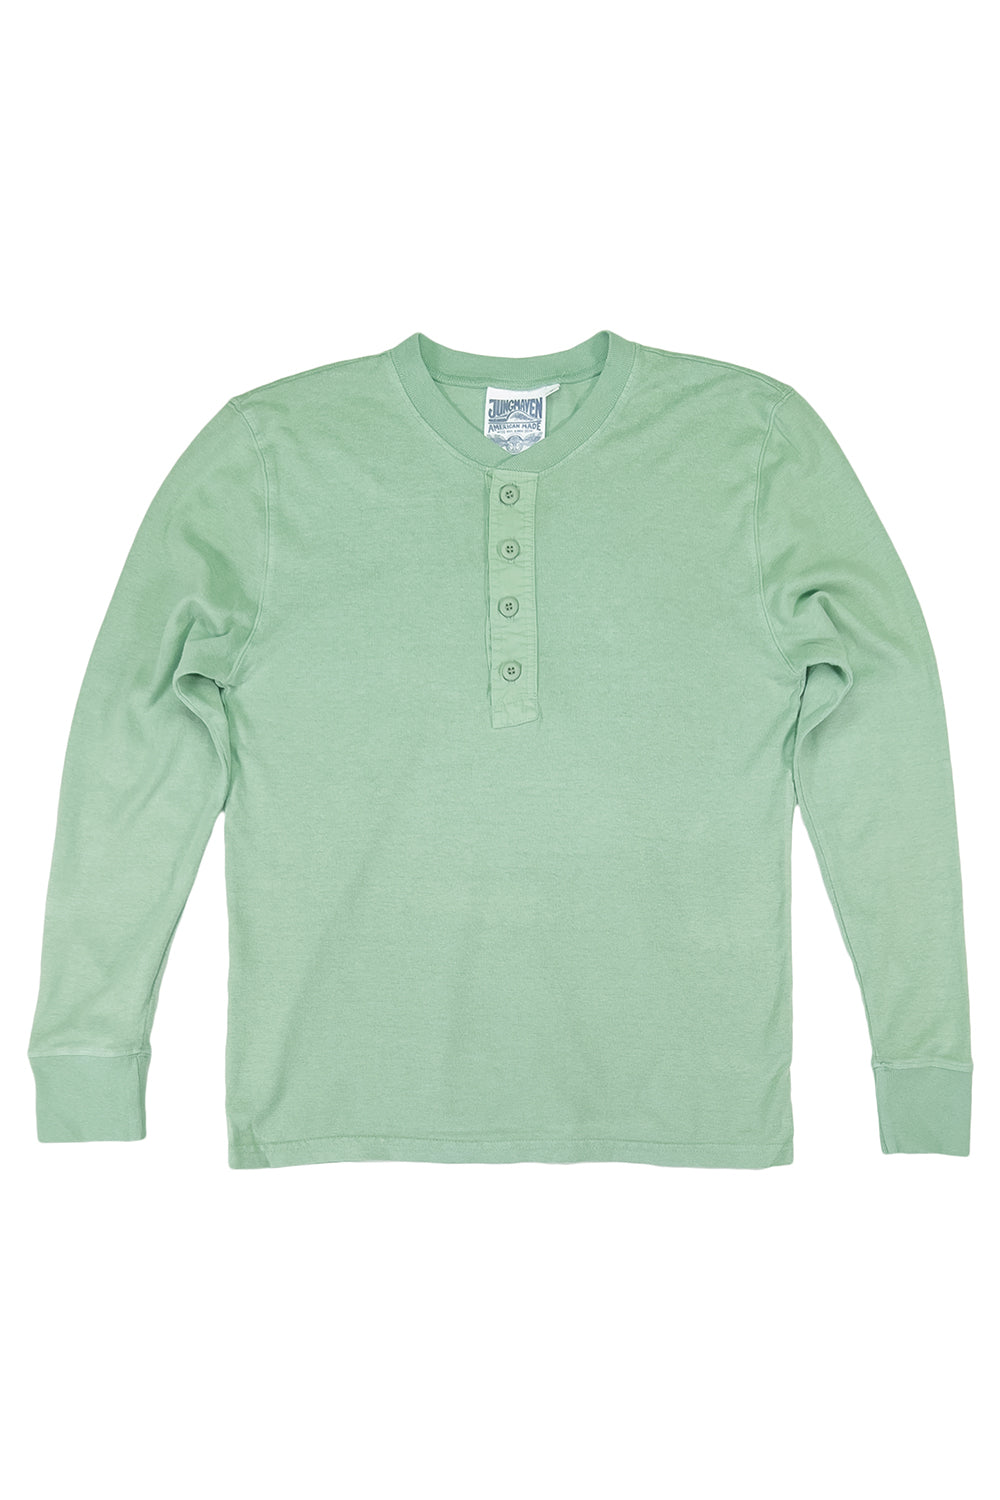 Mountain Henley | Jungmaven Hemp Clothing & Accessories / Color: Sage Green